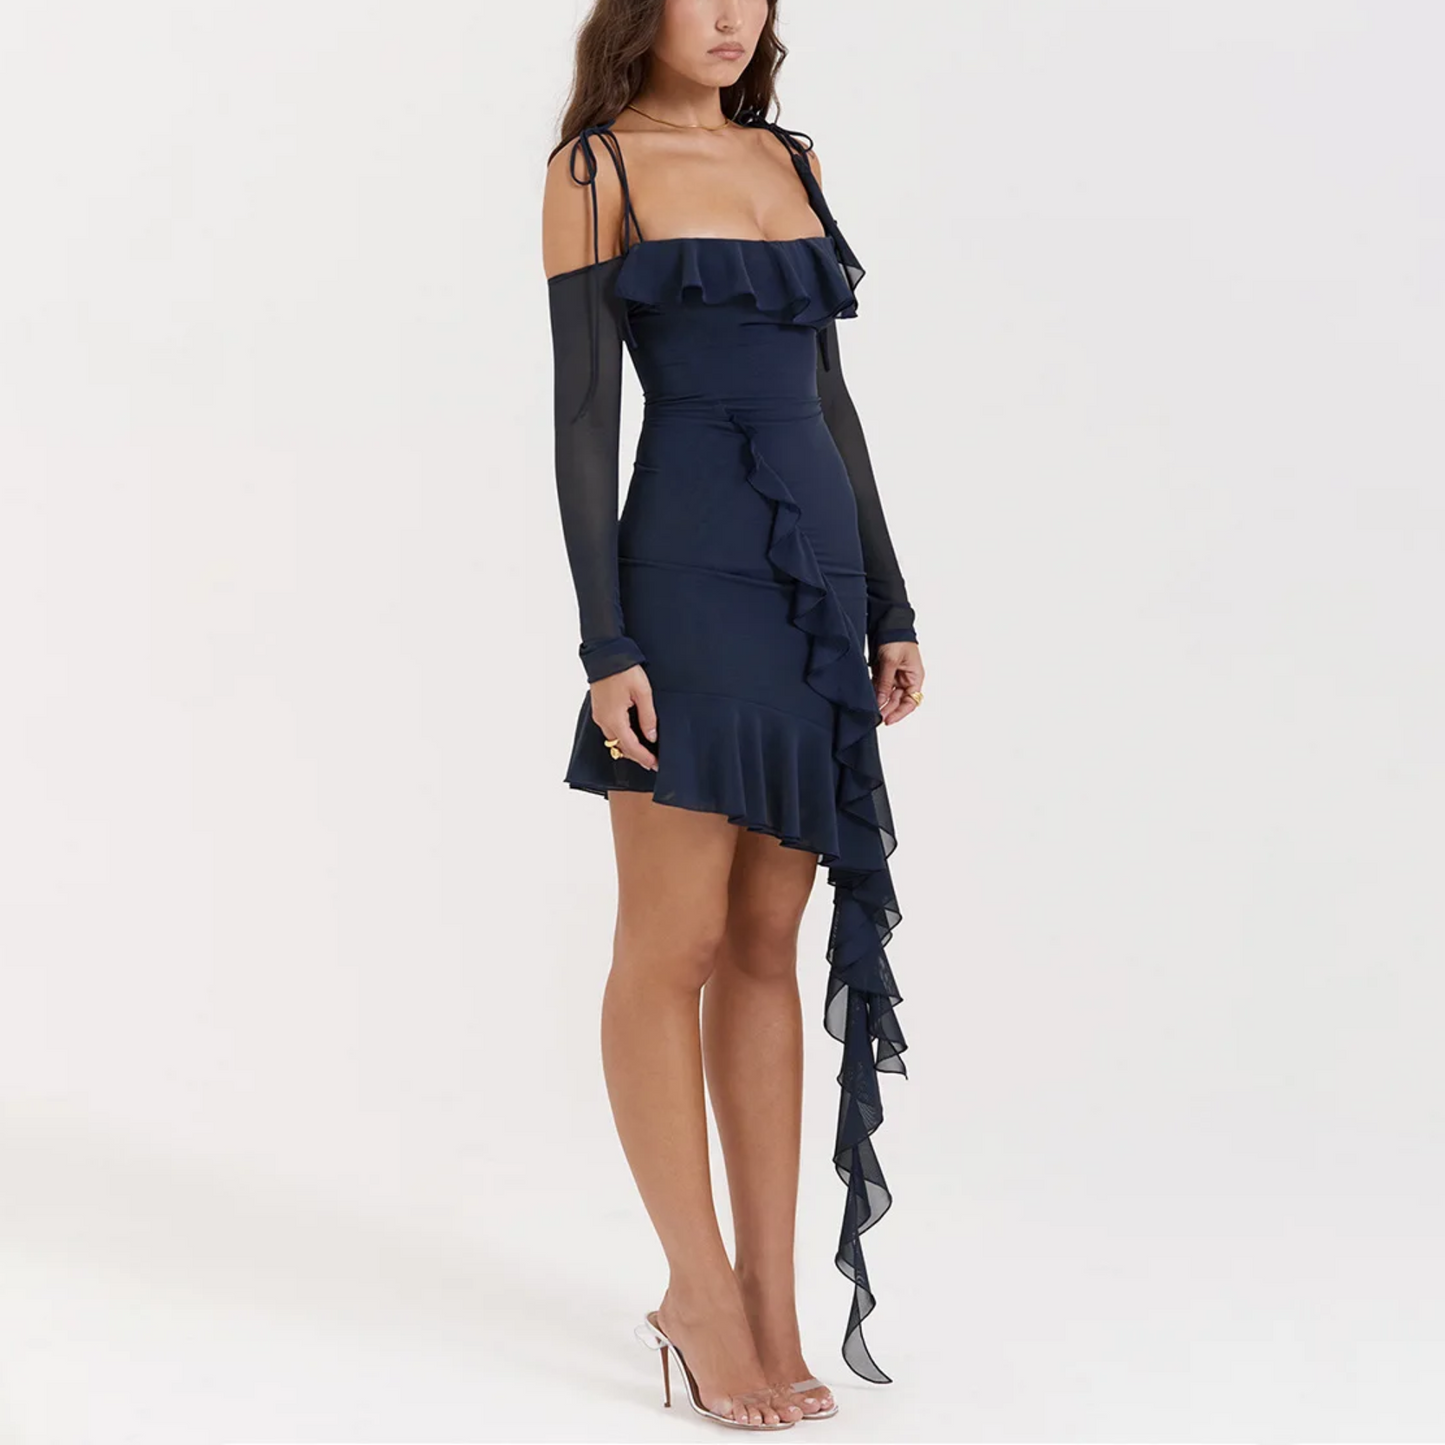 Amma - Navy Blue Mesh Ruffle Asymmetrical Dress